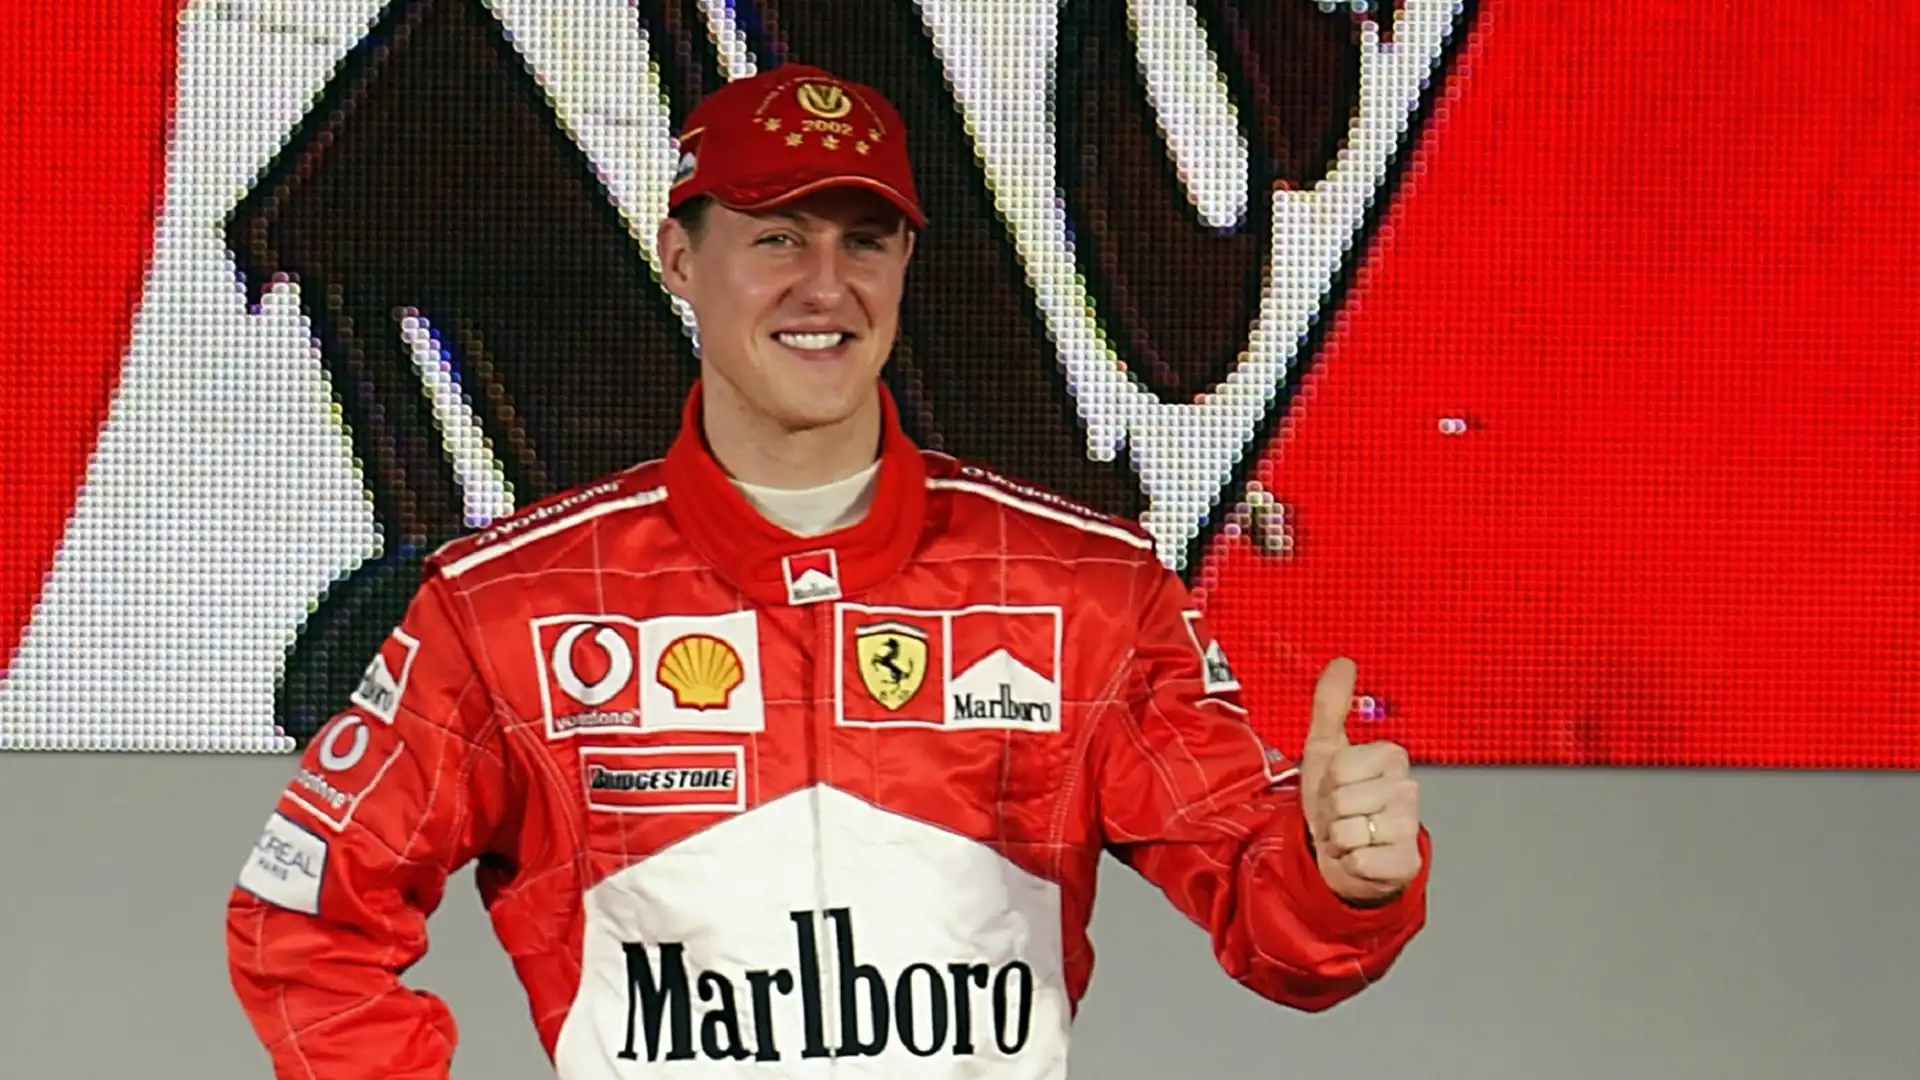 Michael Schumacher (Germania): guadagni stimati 1.31 miliardi di dollari